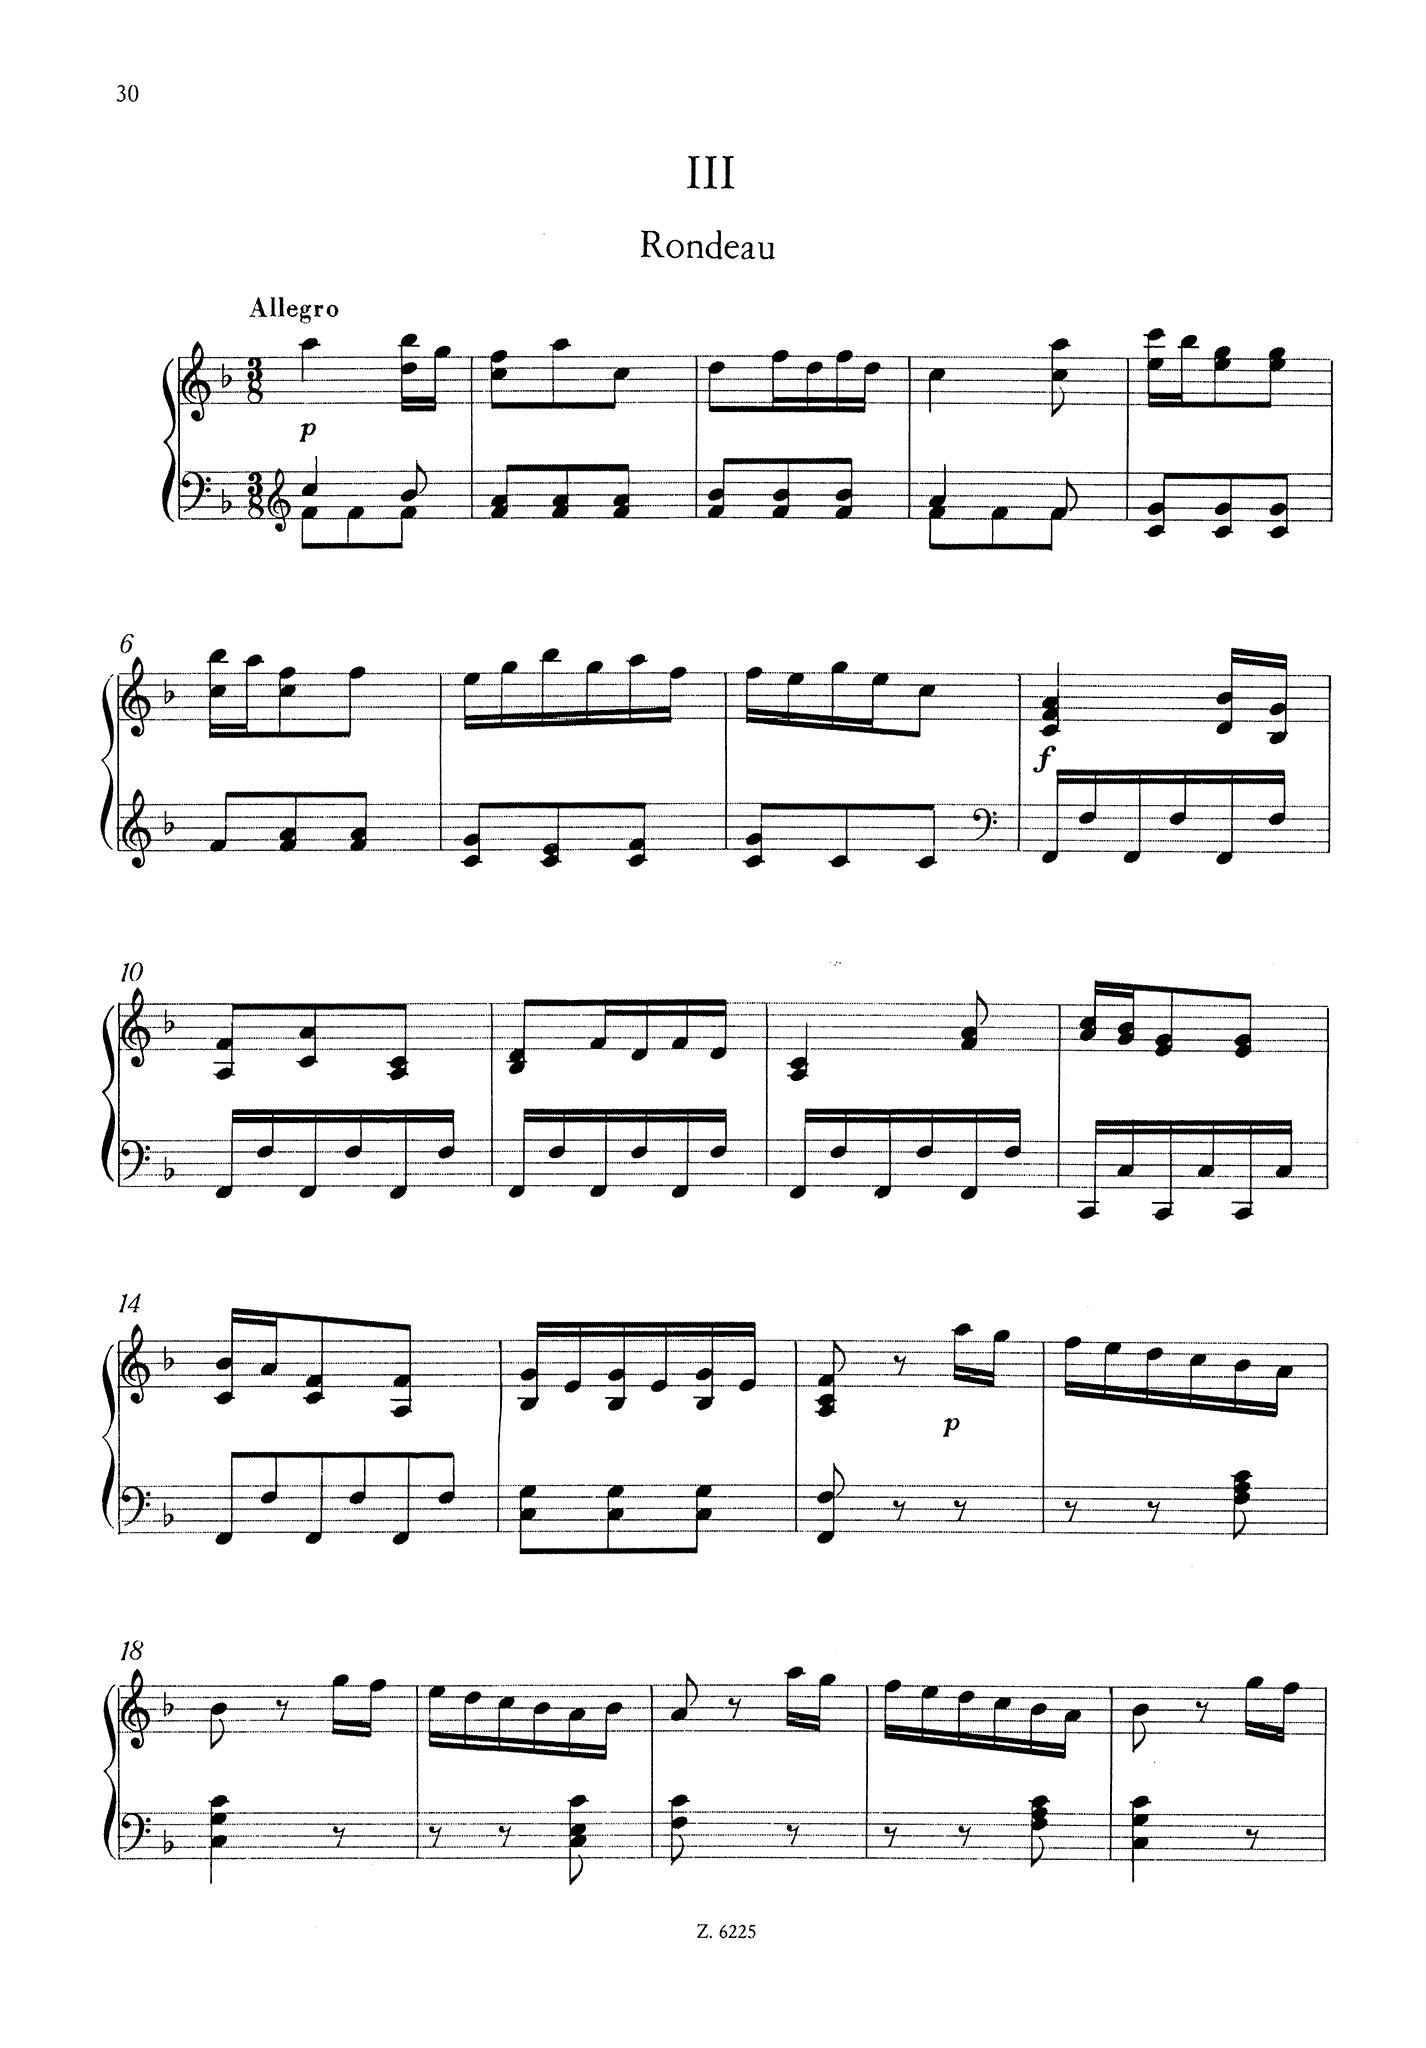 Clarinet Concerto No. 1 (Kaiser) in F Major - Movement 3